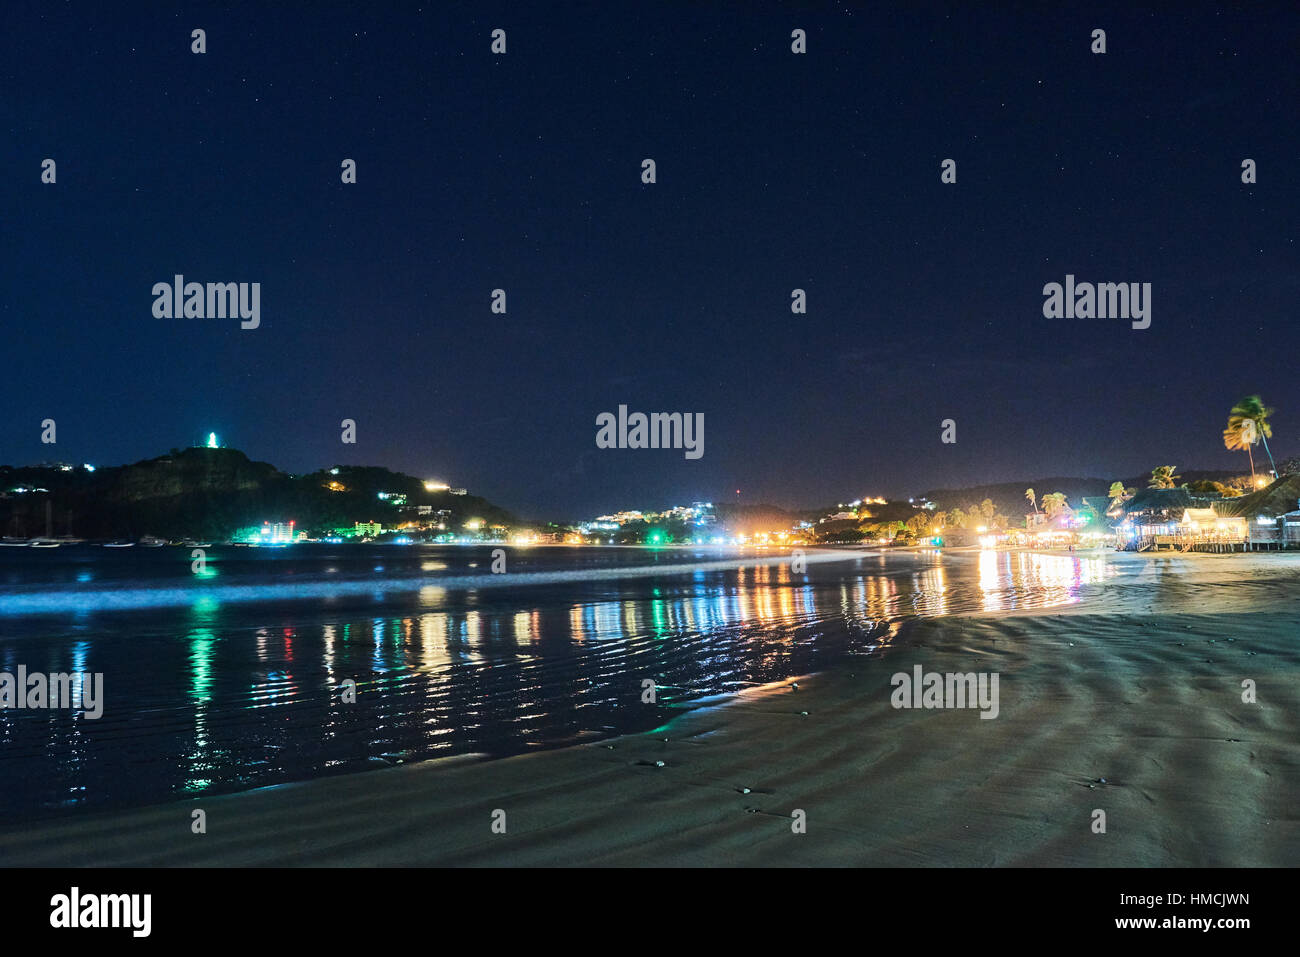 san juan del sur bay at night illuminated Stock Photo